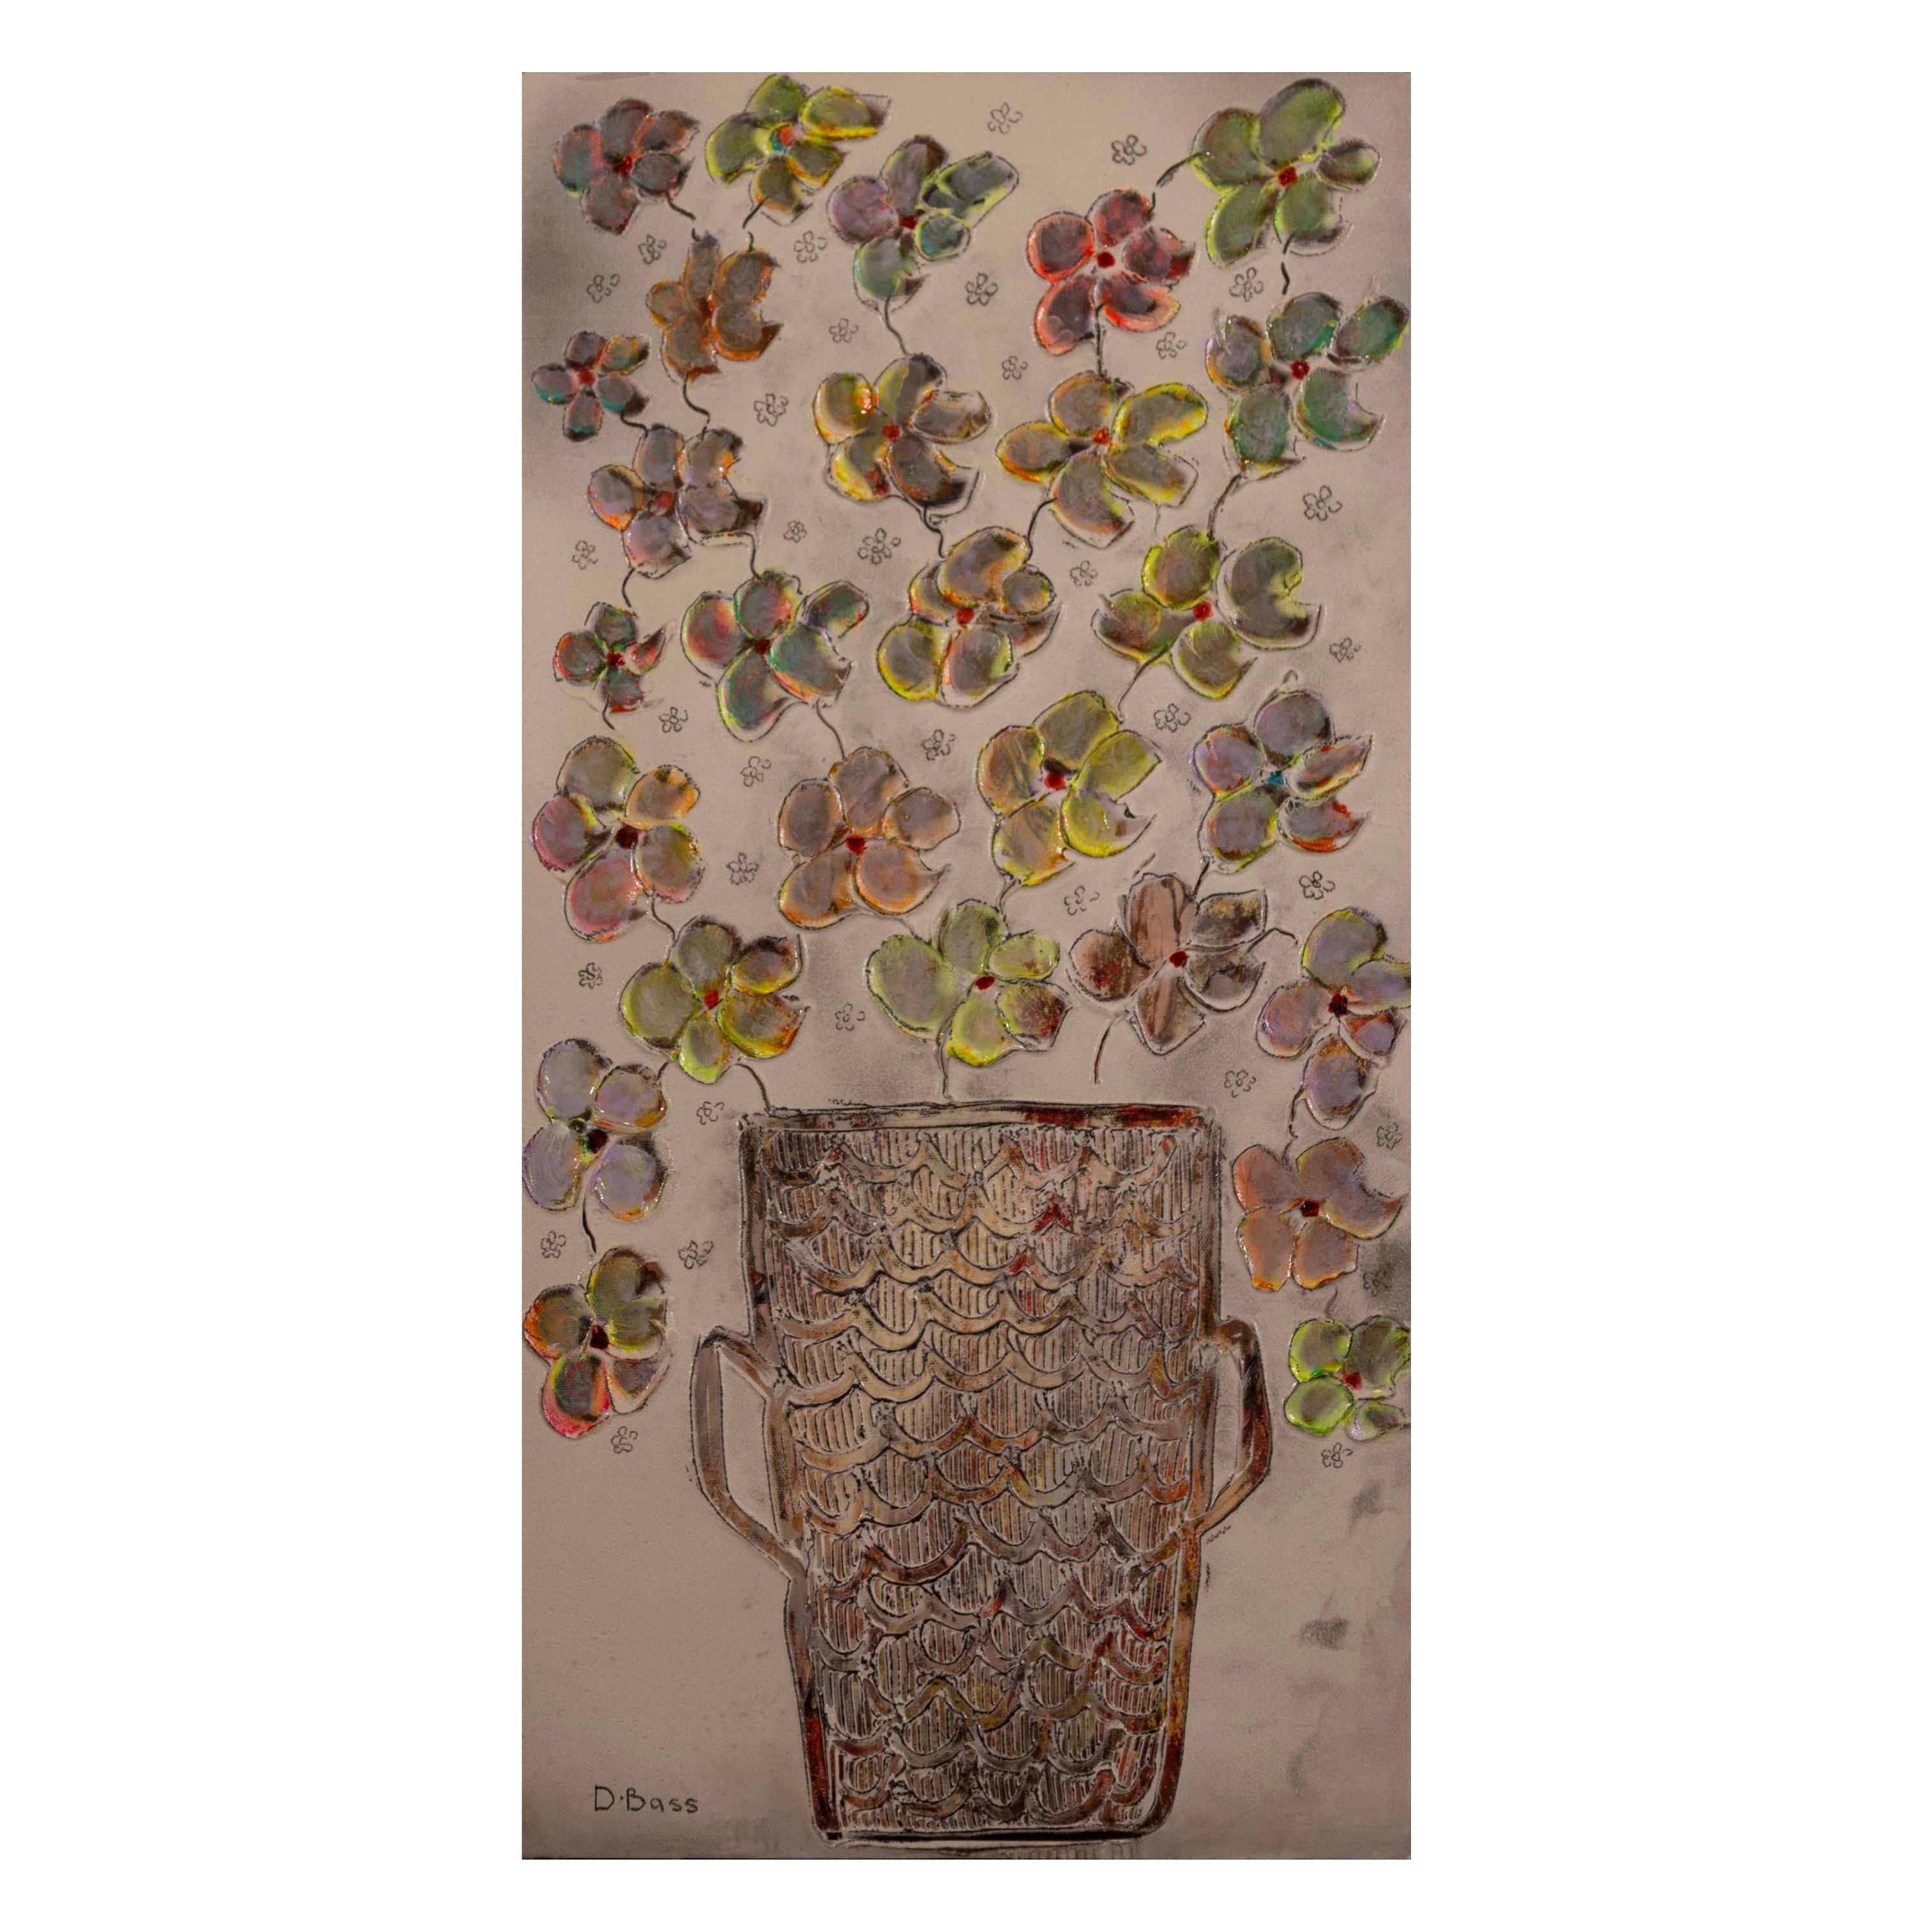 Danushka “D” Bass Untitled Textured Flower Arrangement Signed Original Acrylic For Sale